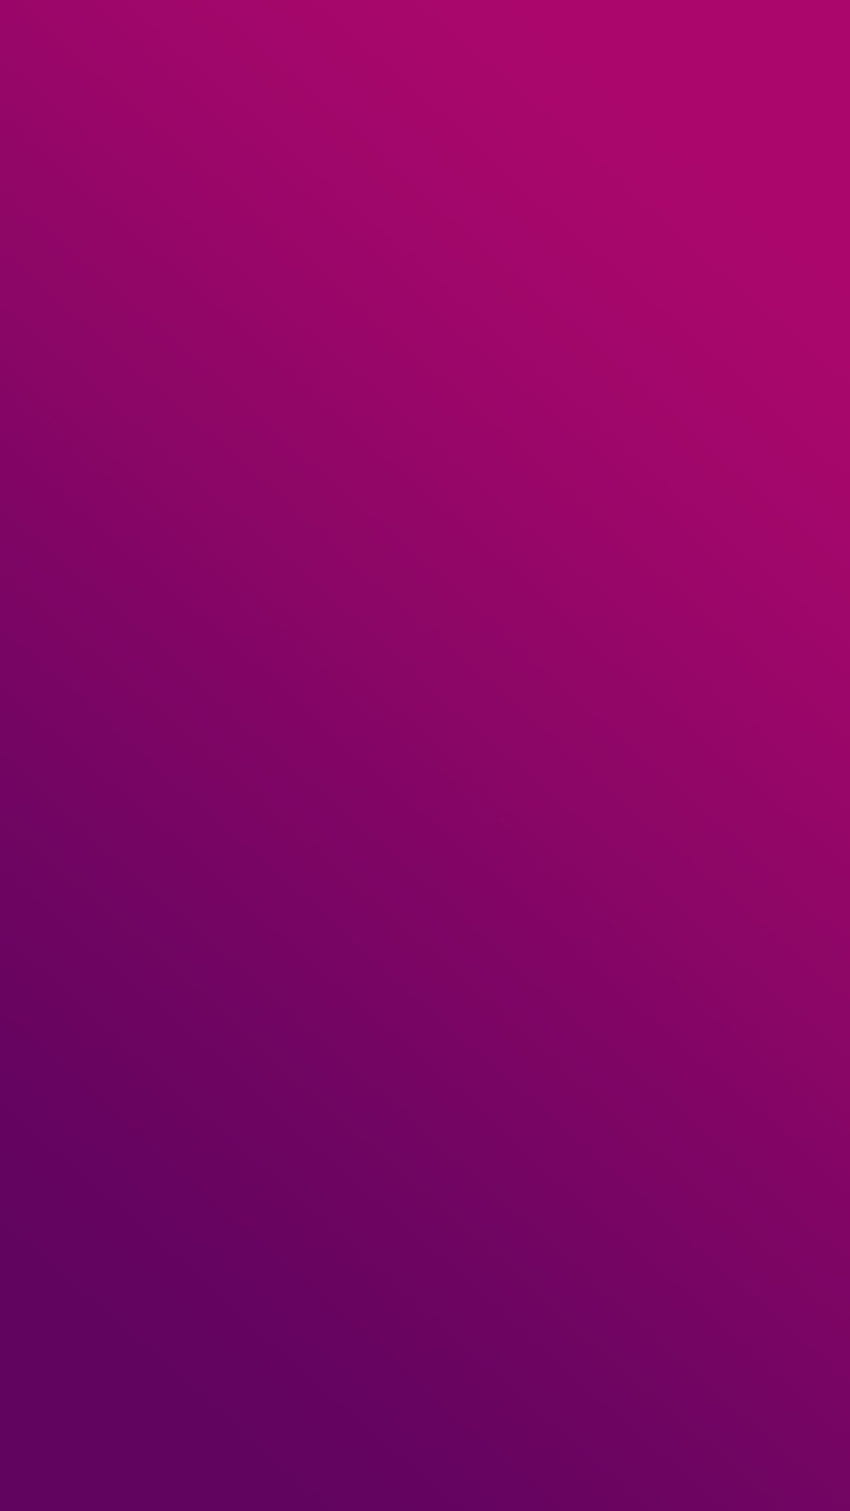 Tentang Fondos Lisos Purple Decoupage, iPhone Jepang Modern wallpaper ponsel HD